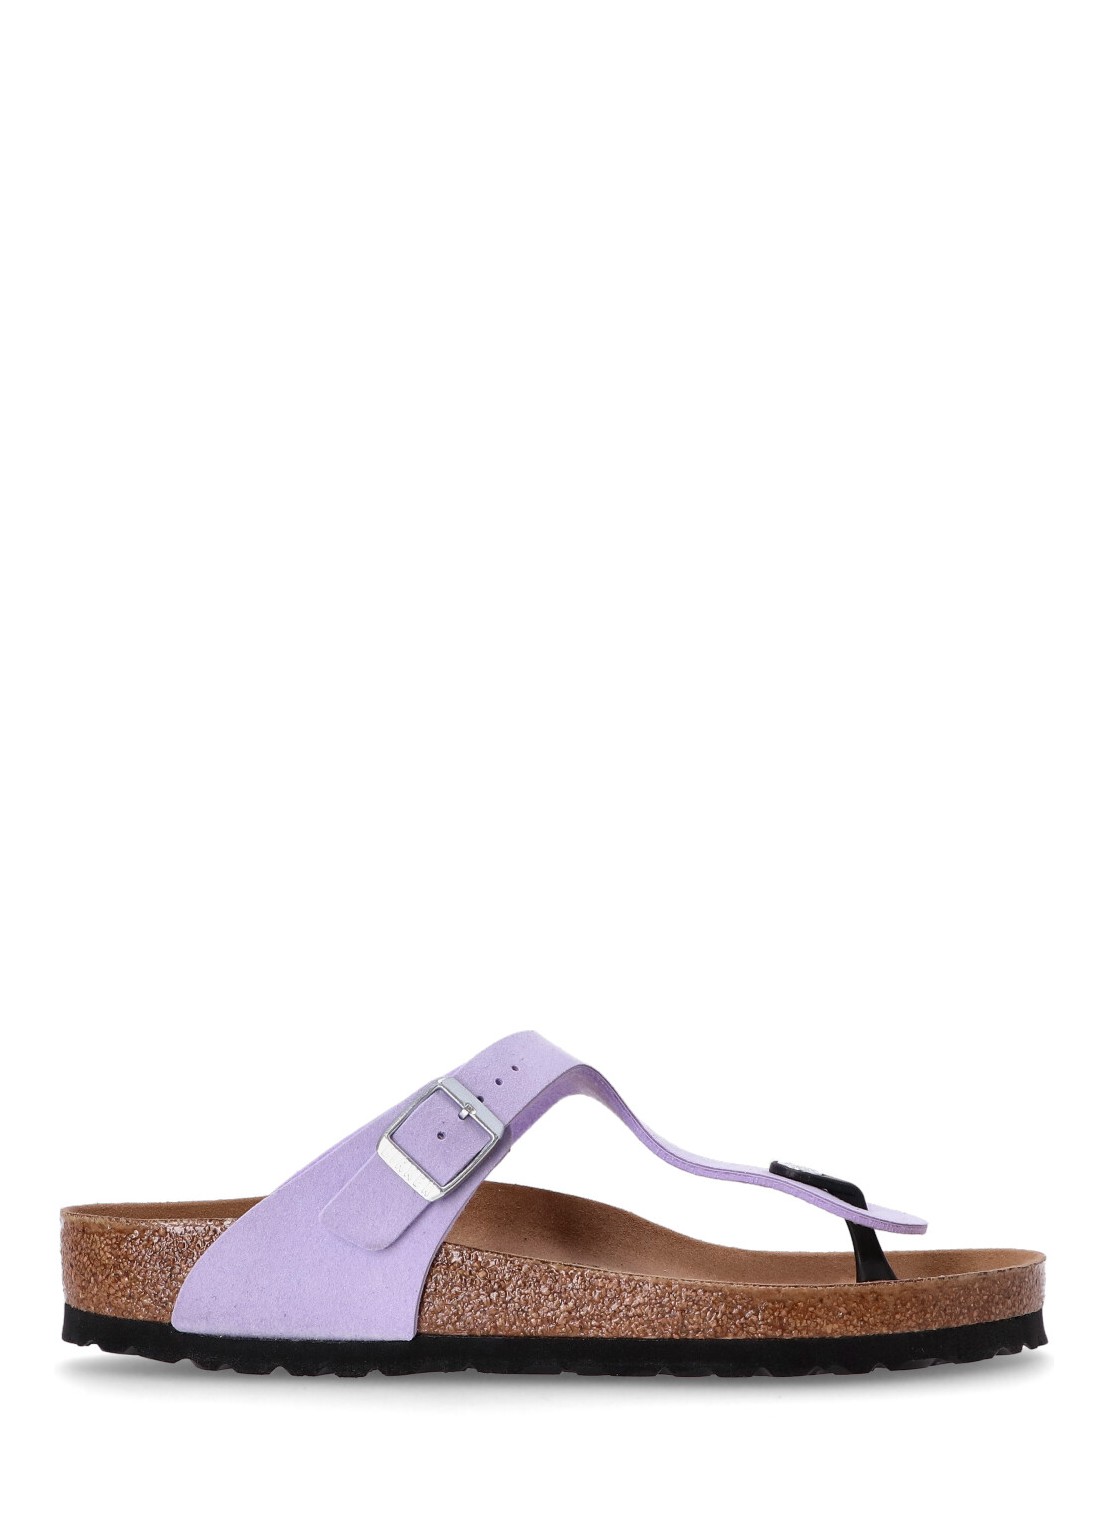 Planas birkenstock flat shoe woman gizeh syn soft purple fog veg 1025475 soft birki vegan purple fog